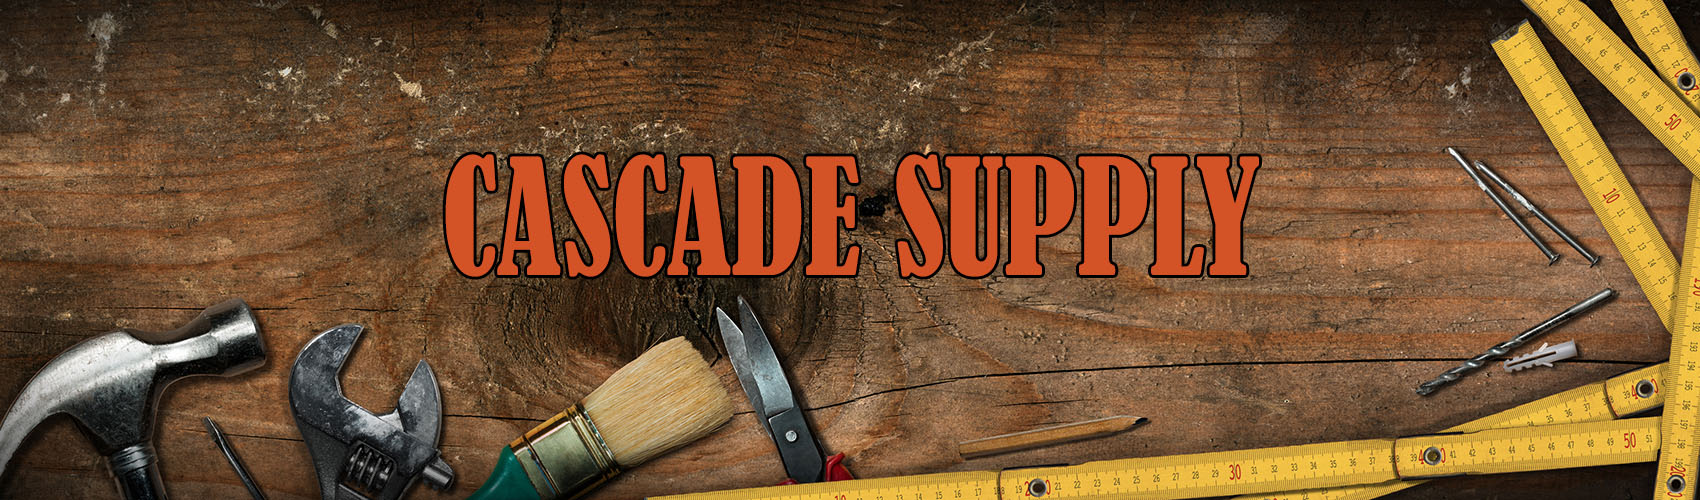 Cascade Supply tools and logo